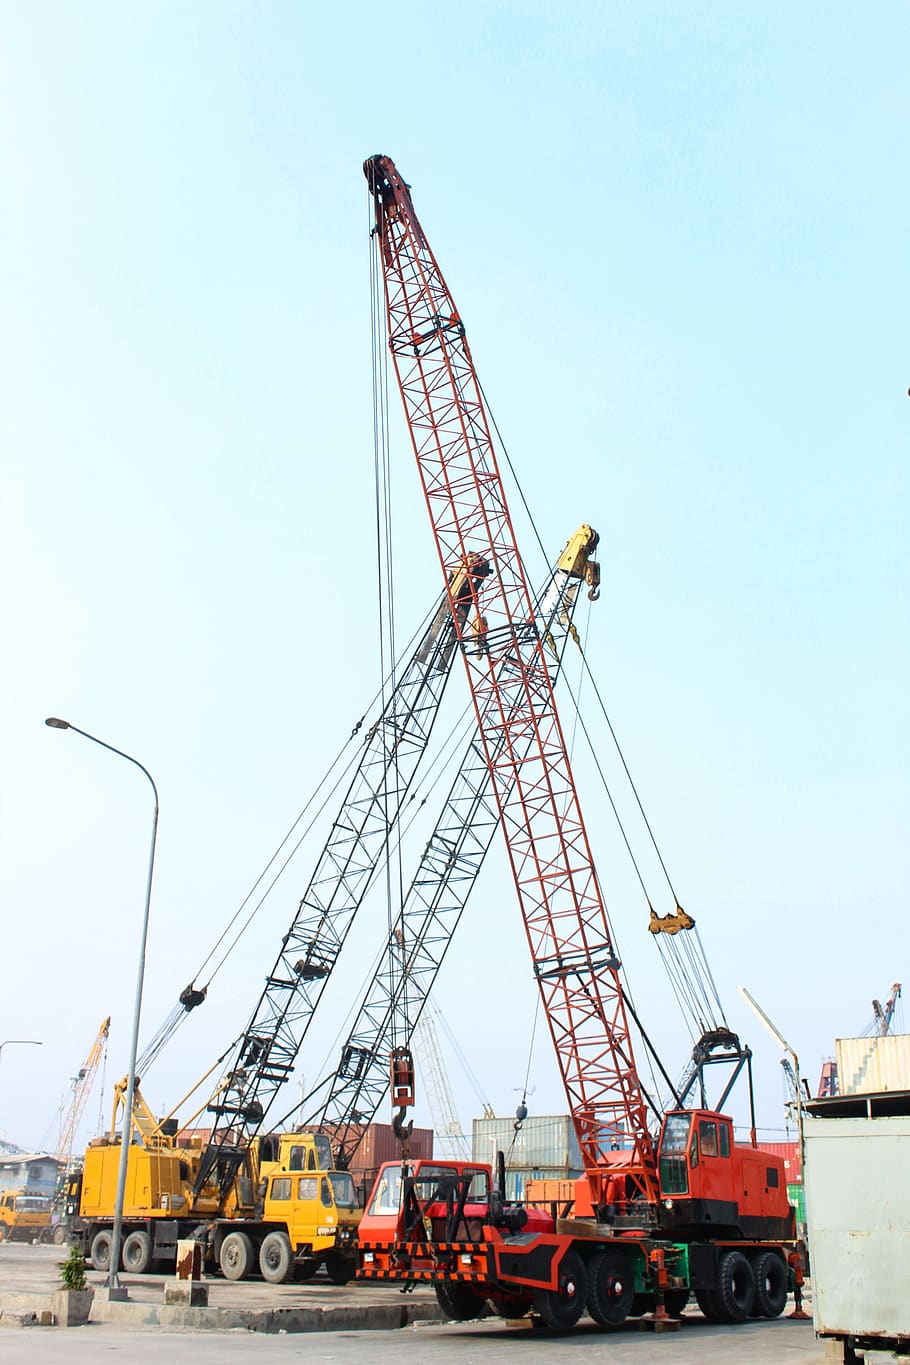 crane, industry, industrial, technology, sky, machinery, transportation, mode of transportation, crane - construction machinery, nature